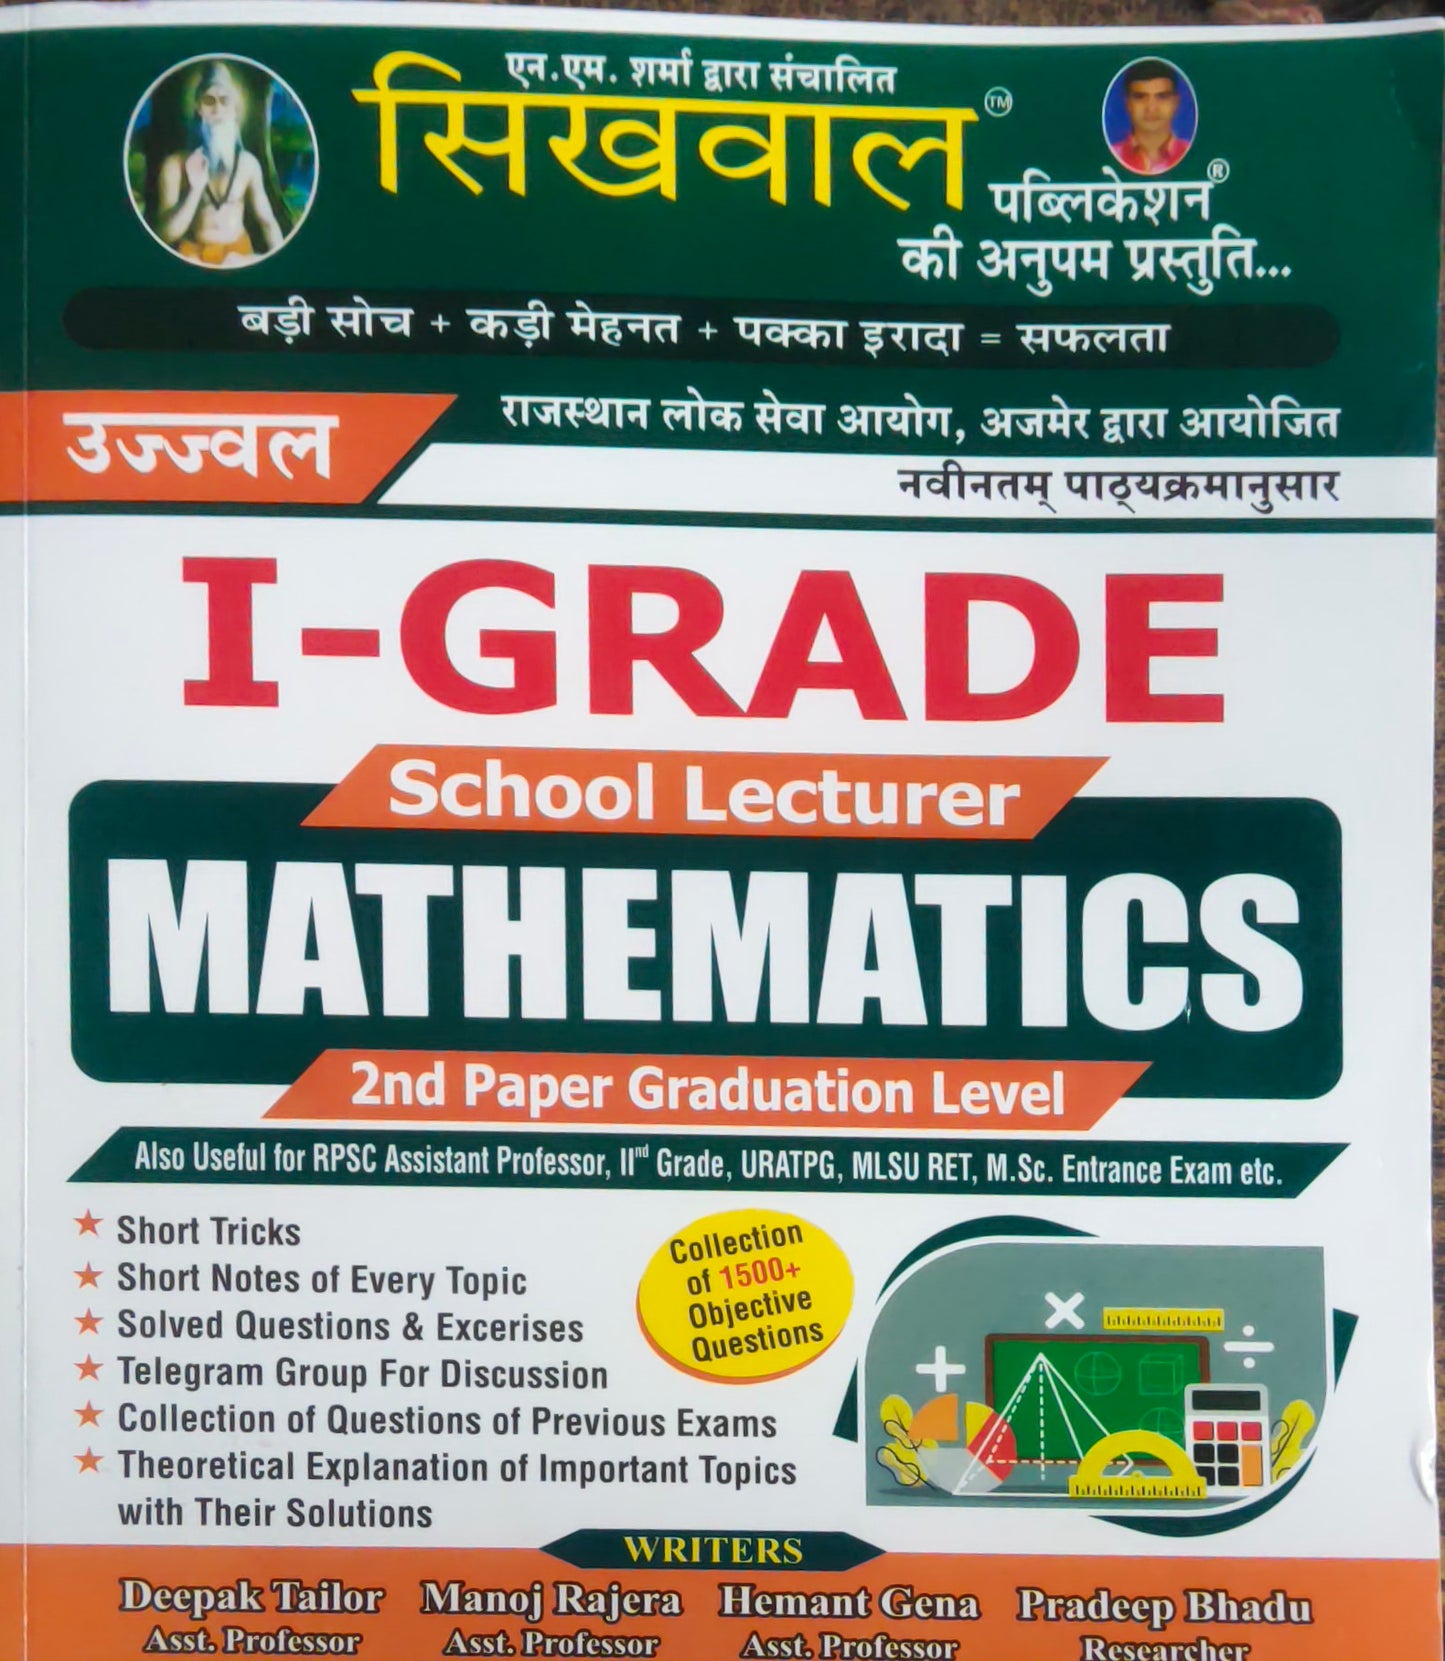 Sikhwal 1st grade school lecturer mathmatics 2nd paper  graduation level